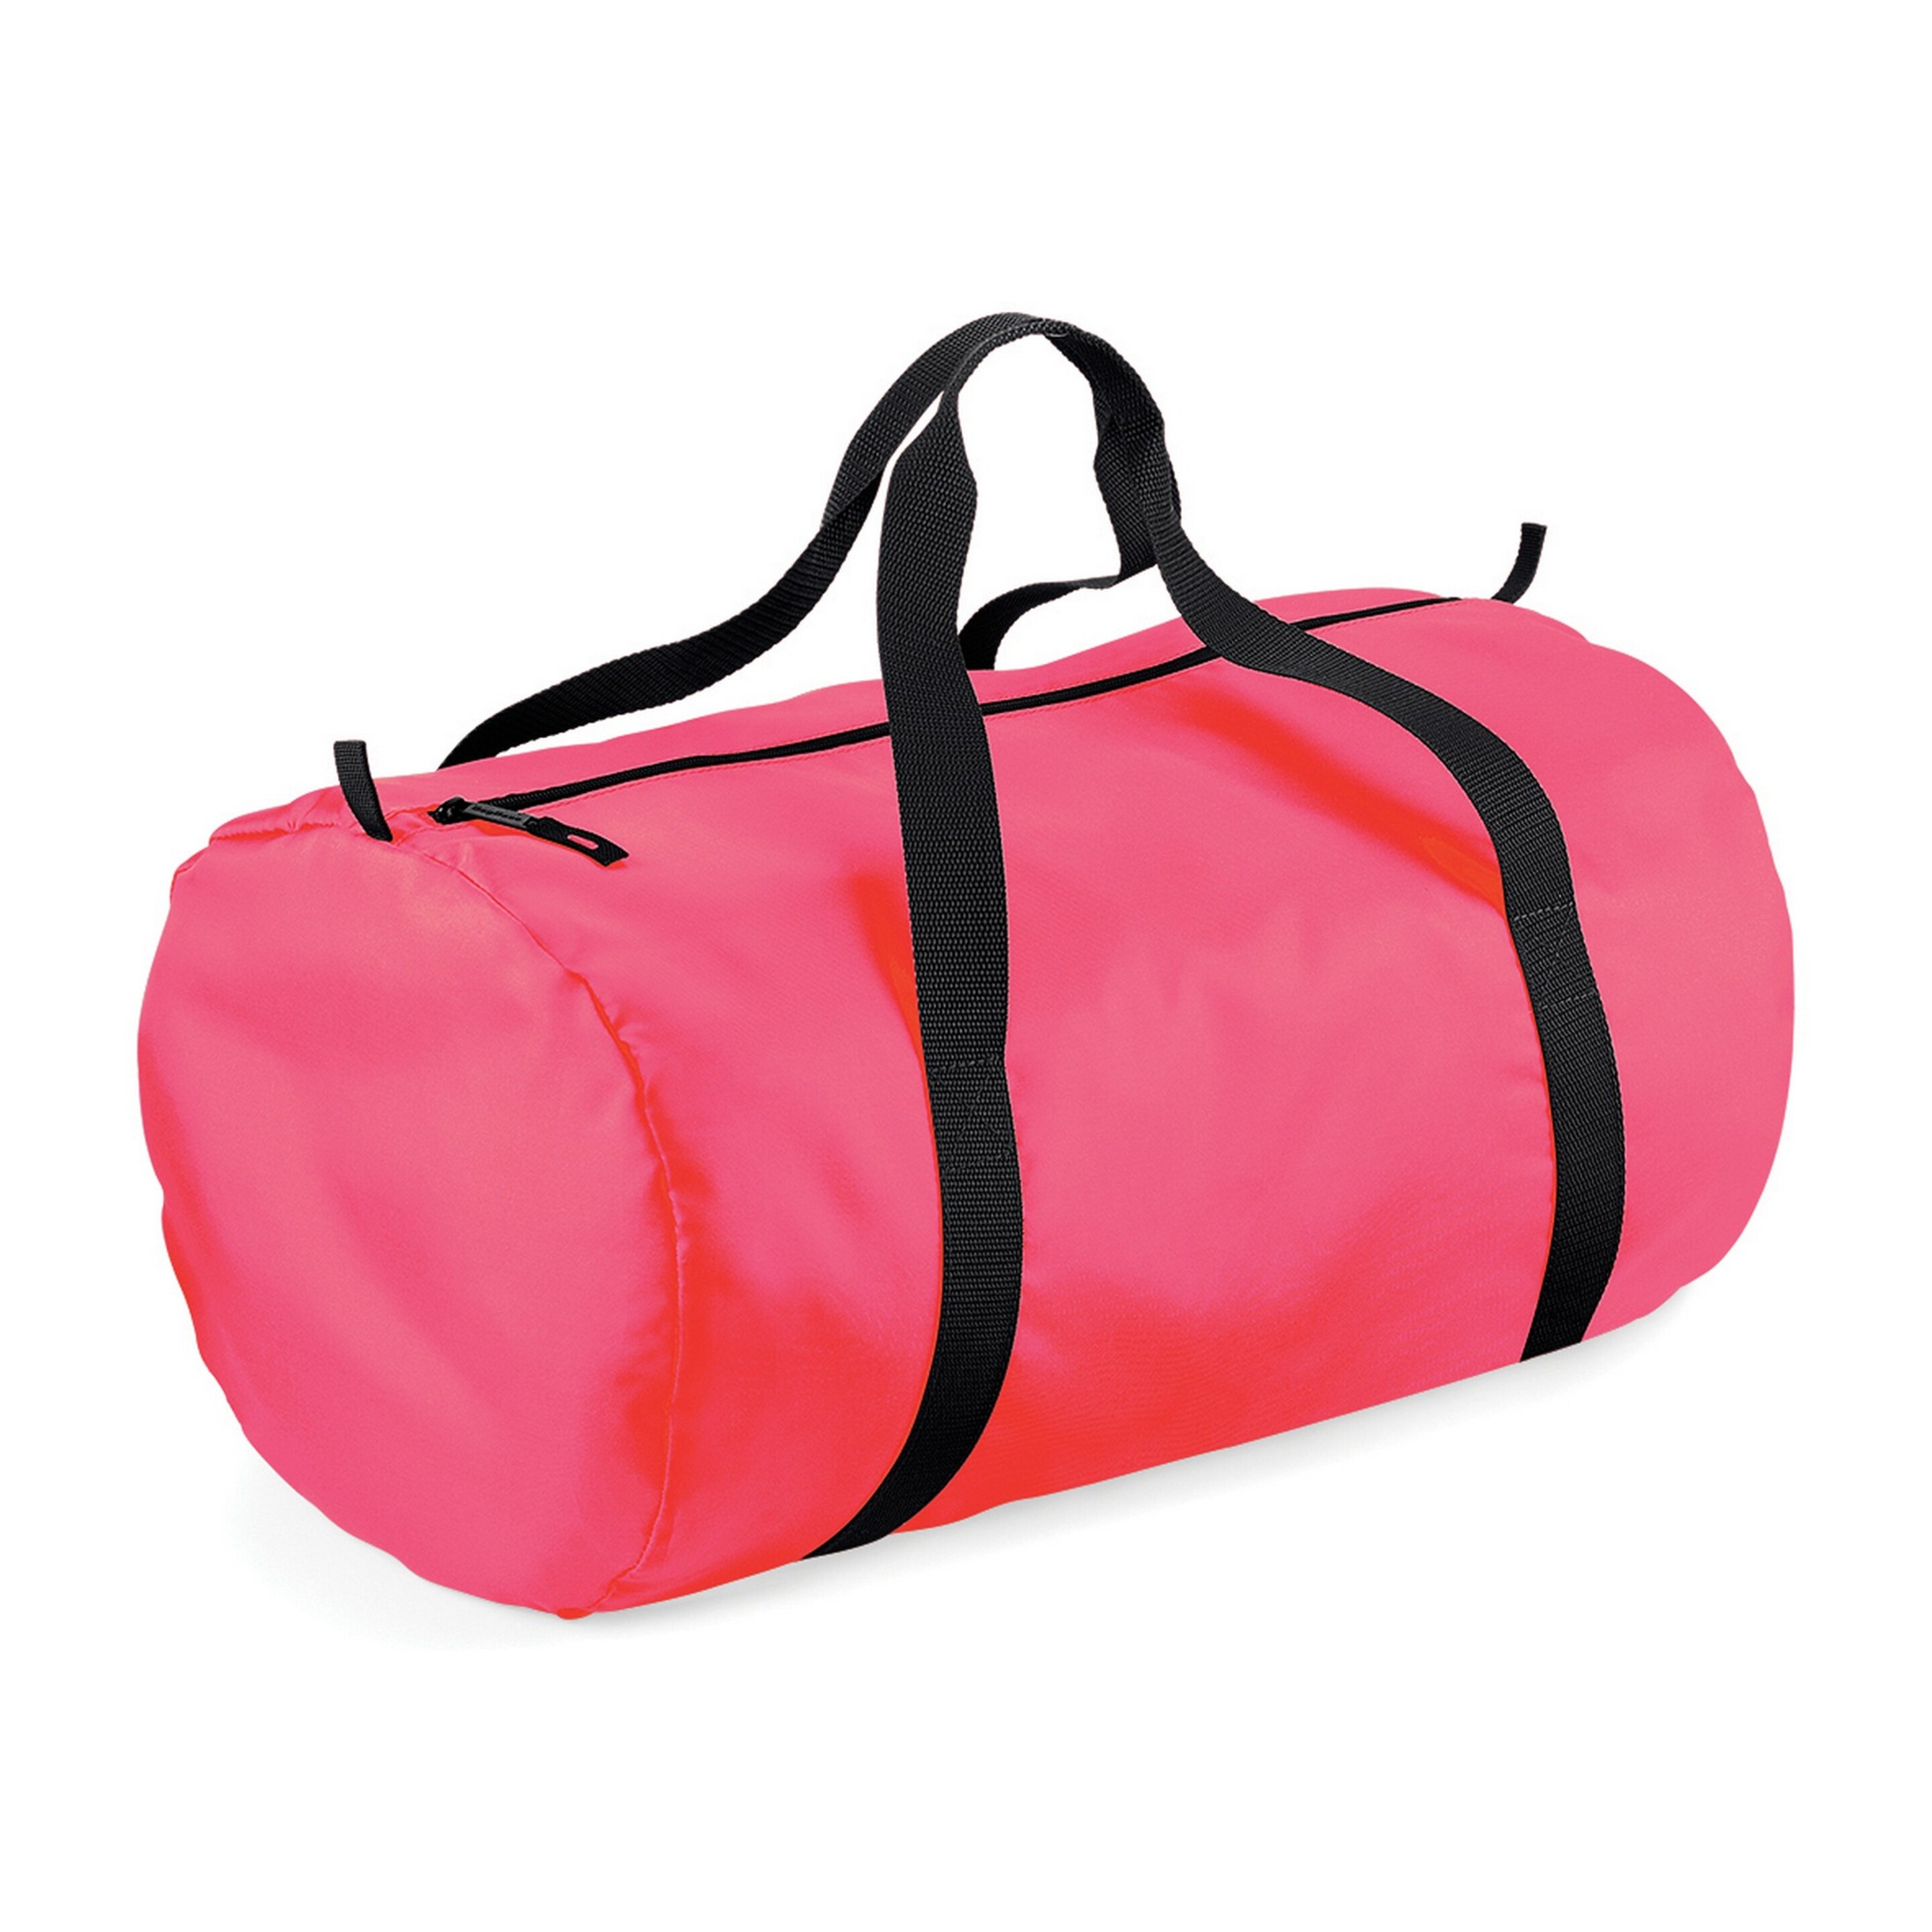 Bolsa De Deporte / De Viaje Impermeable Modelo Barrel Packaway (32 Litros) Bagbase (Rosa)